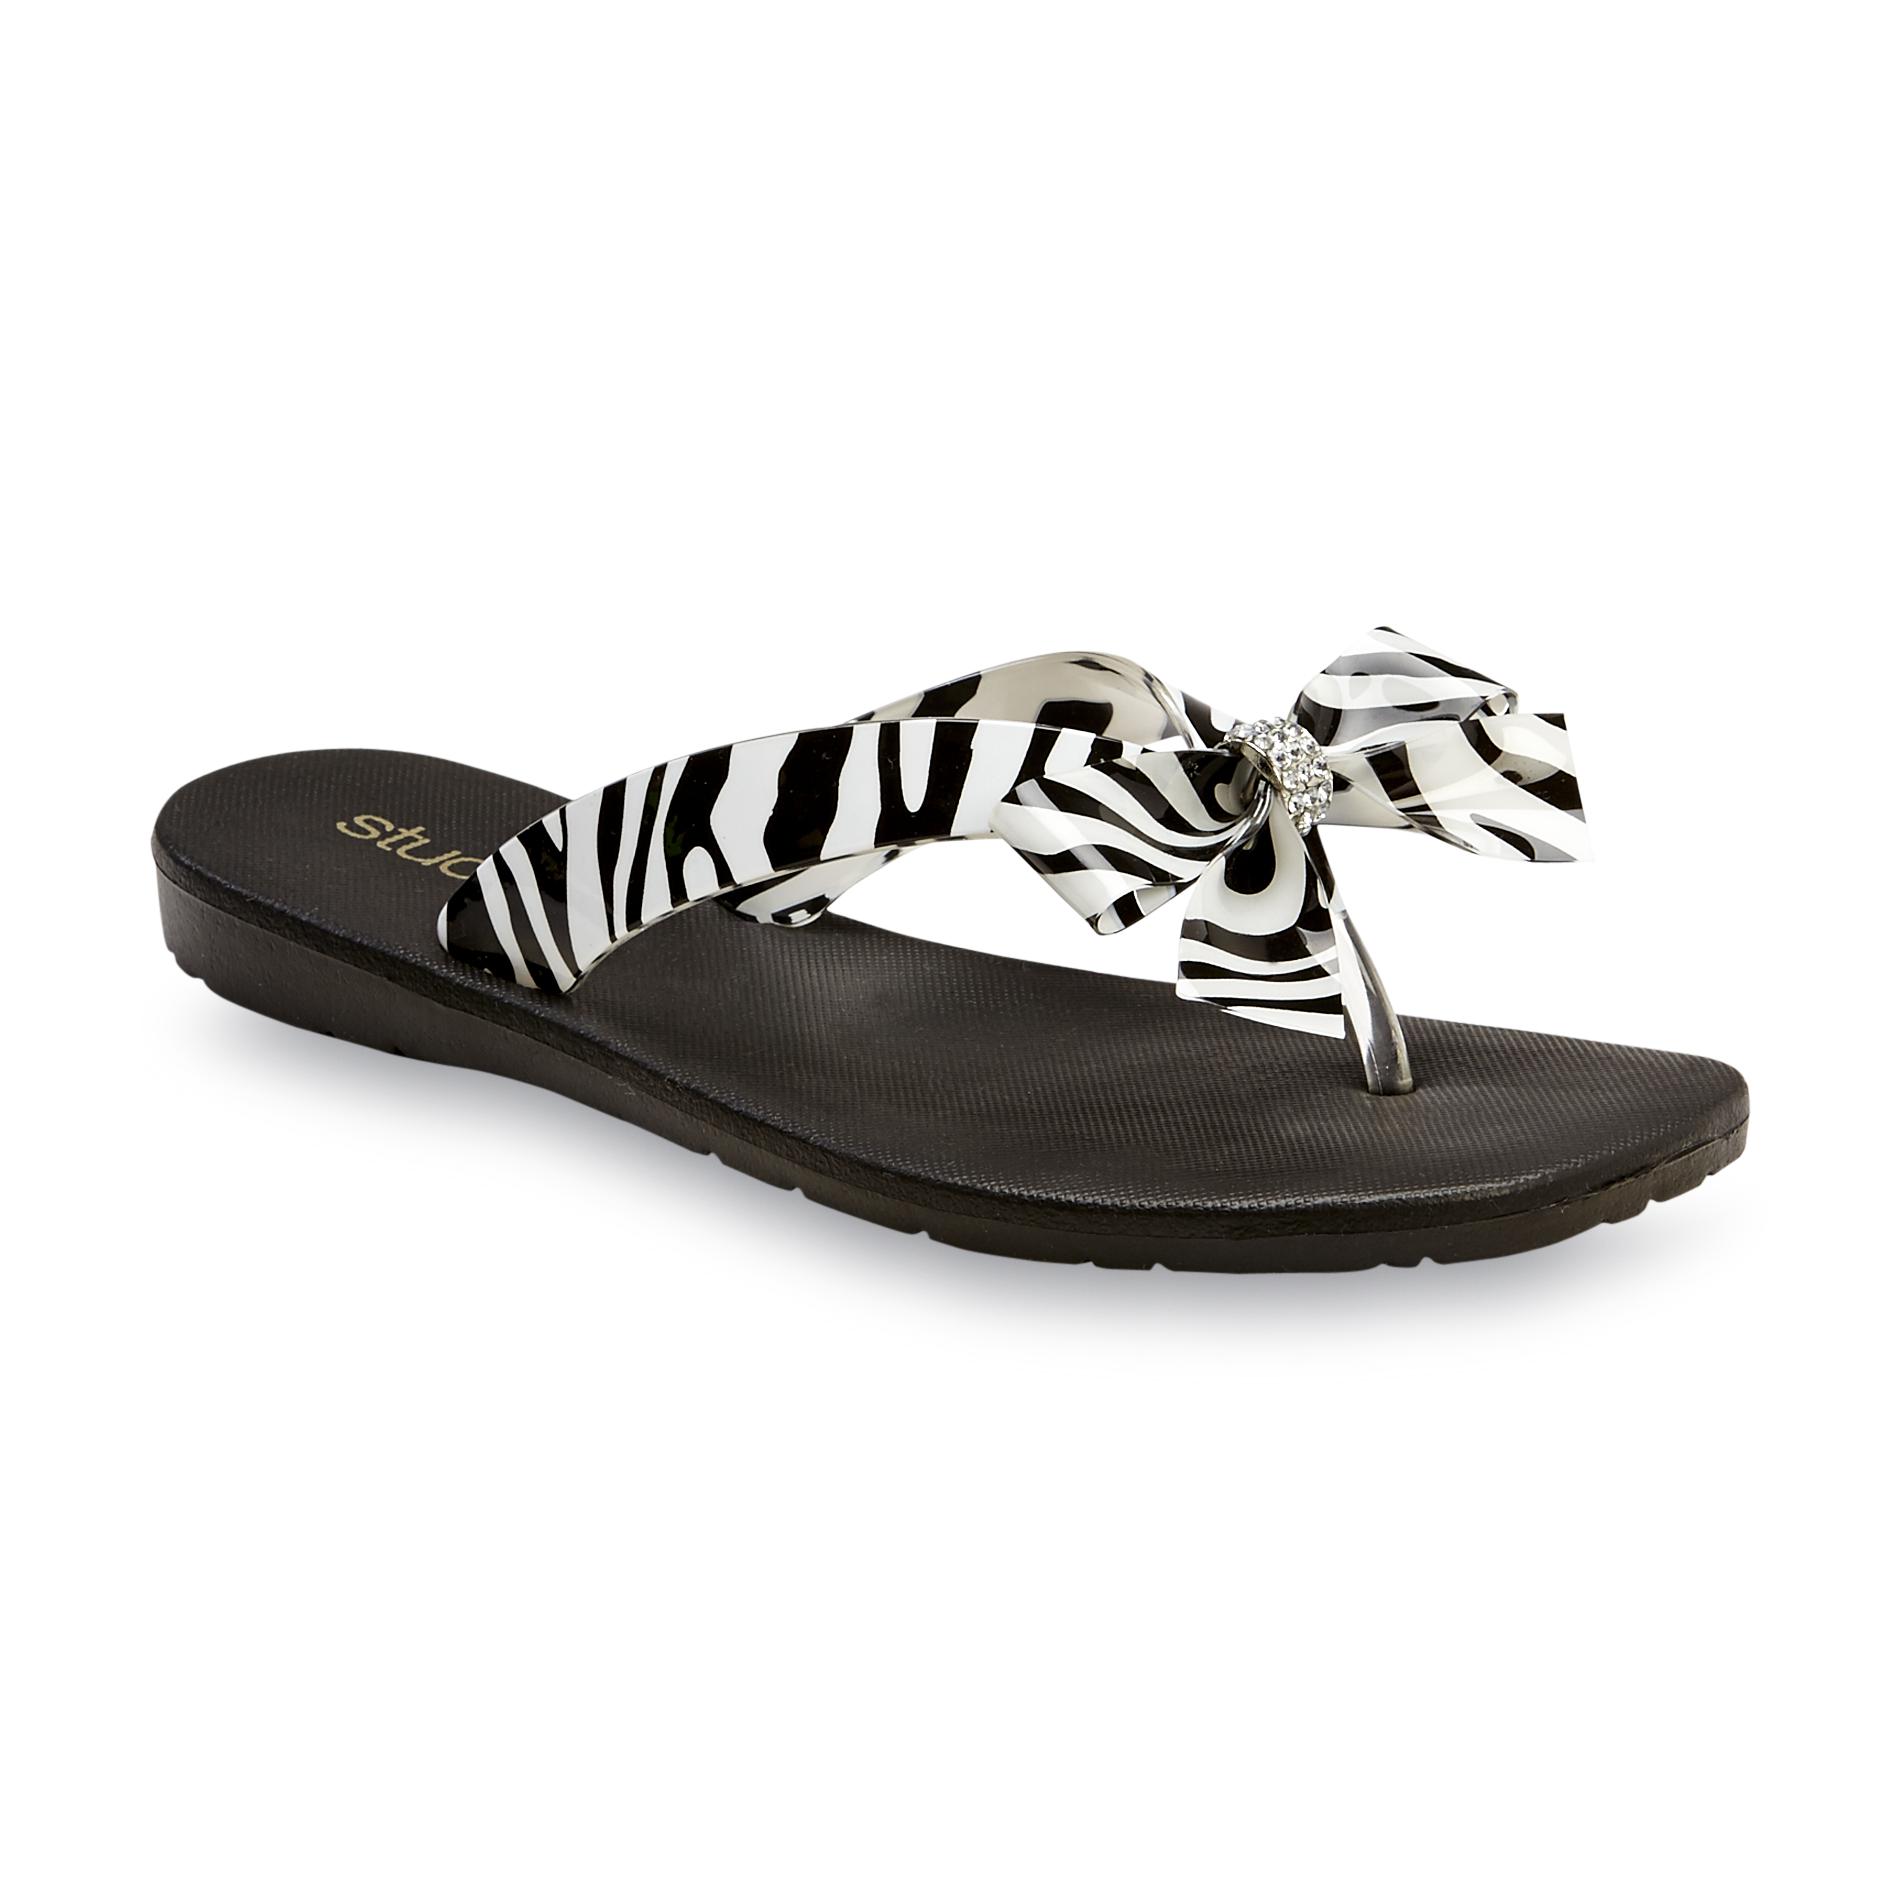 Studio S Women's Rhinestone Bow Flip-Flops - Zebra